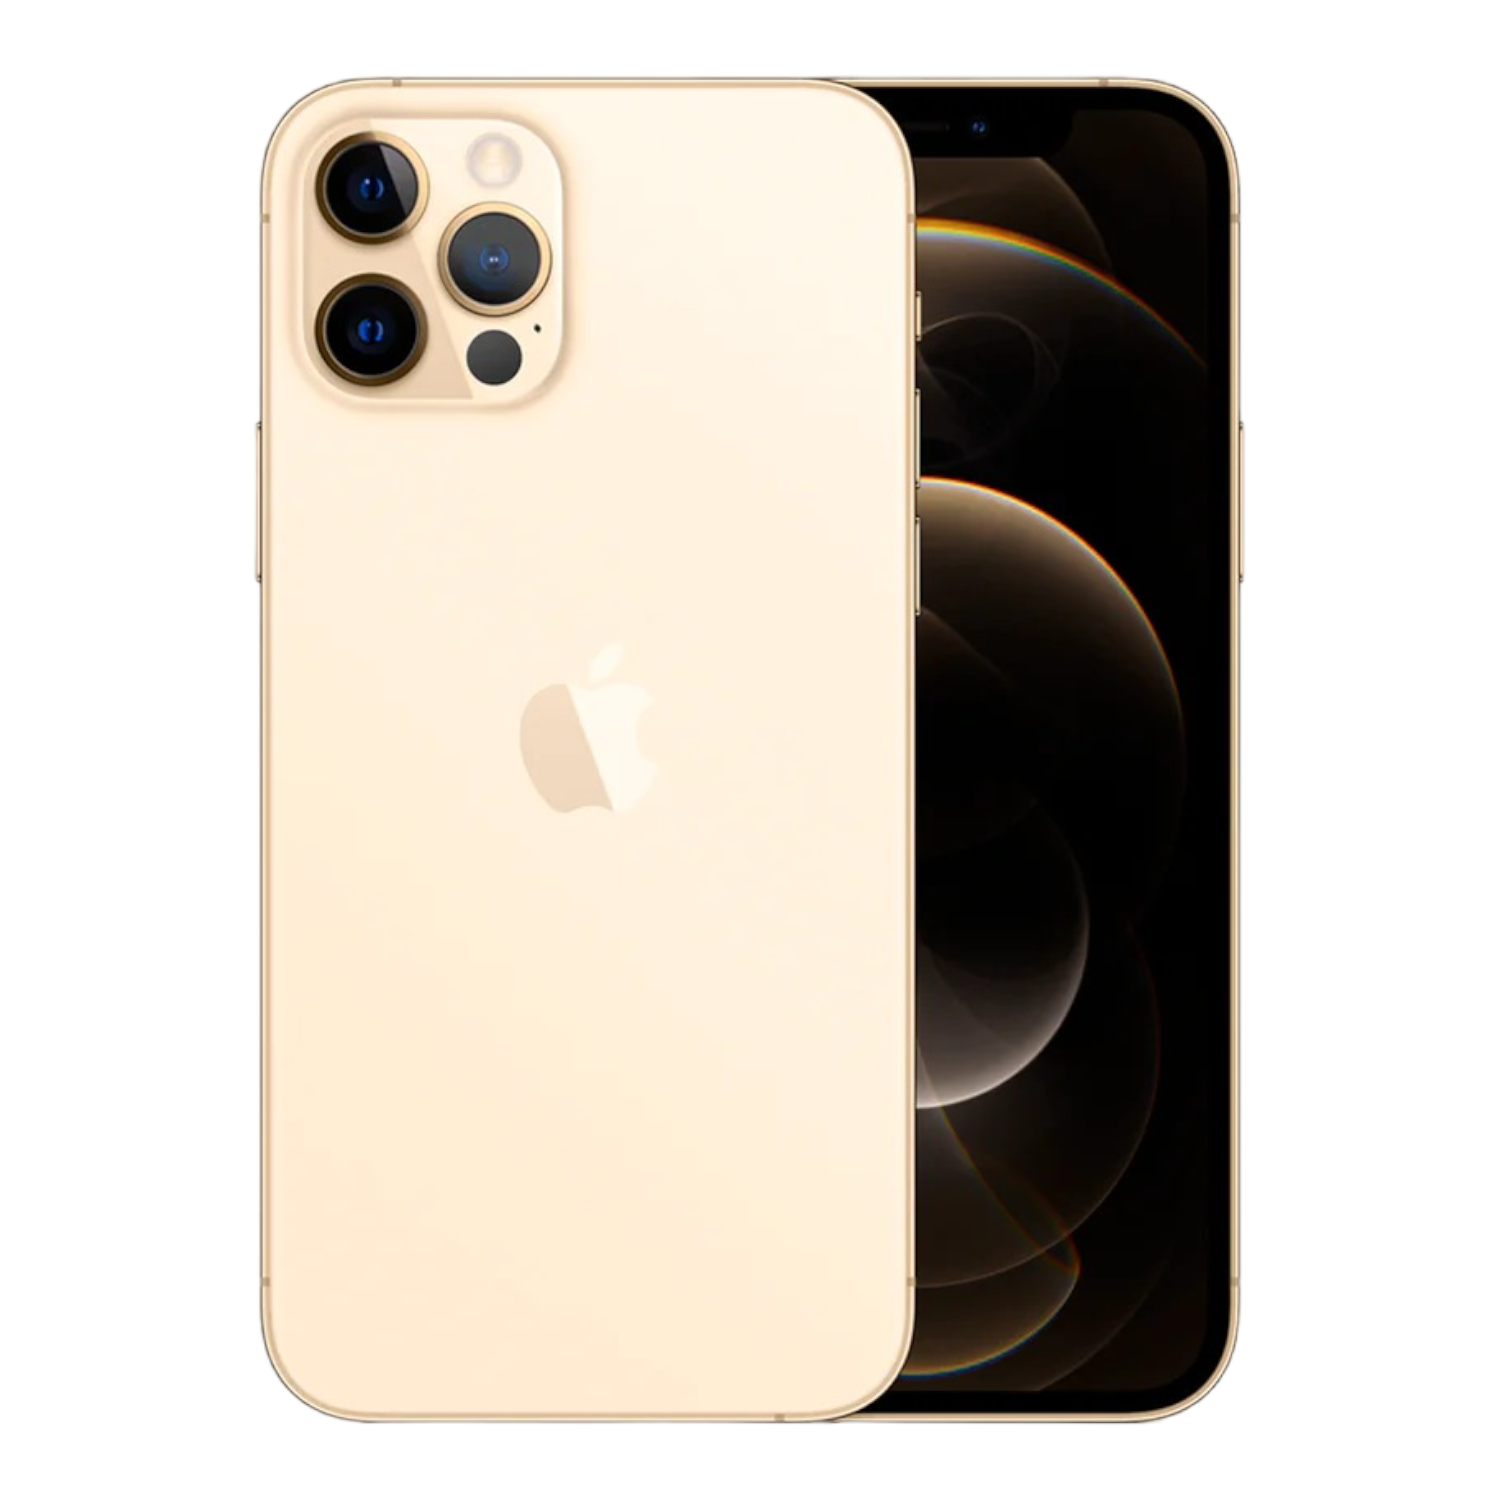 Apple IPhone 12 Pro 128GB Celular Liberado (Reacondicionado) Color Oro